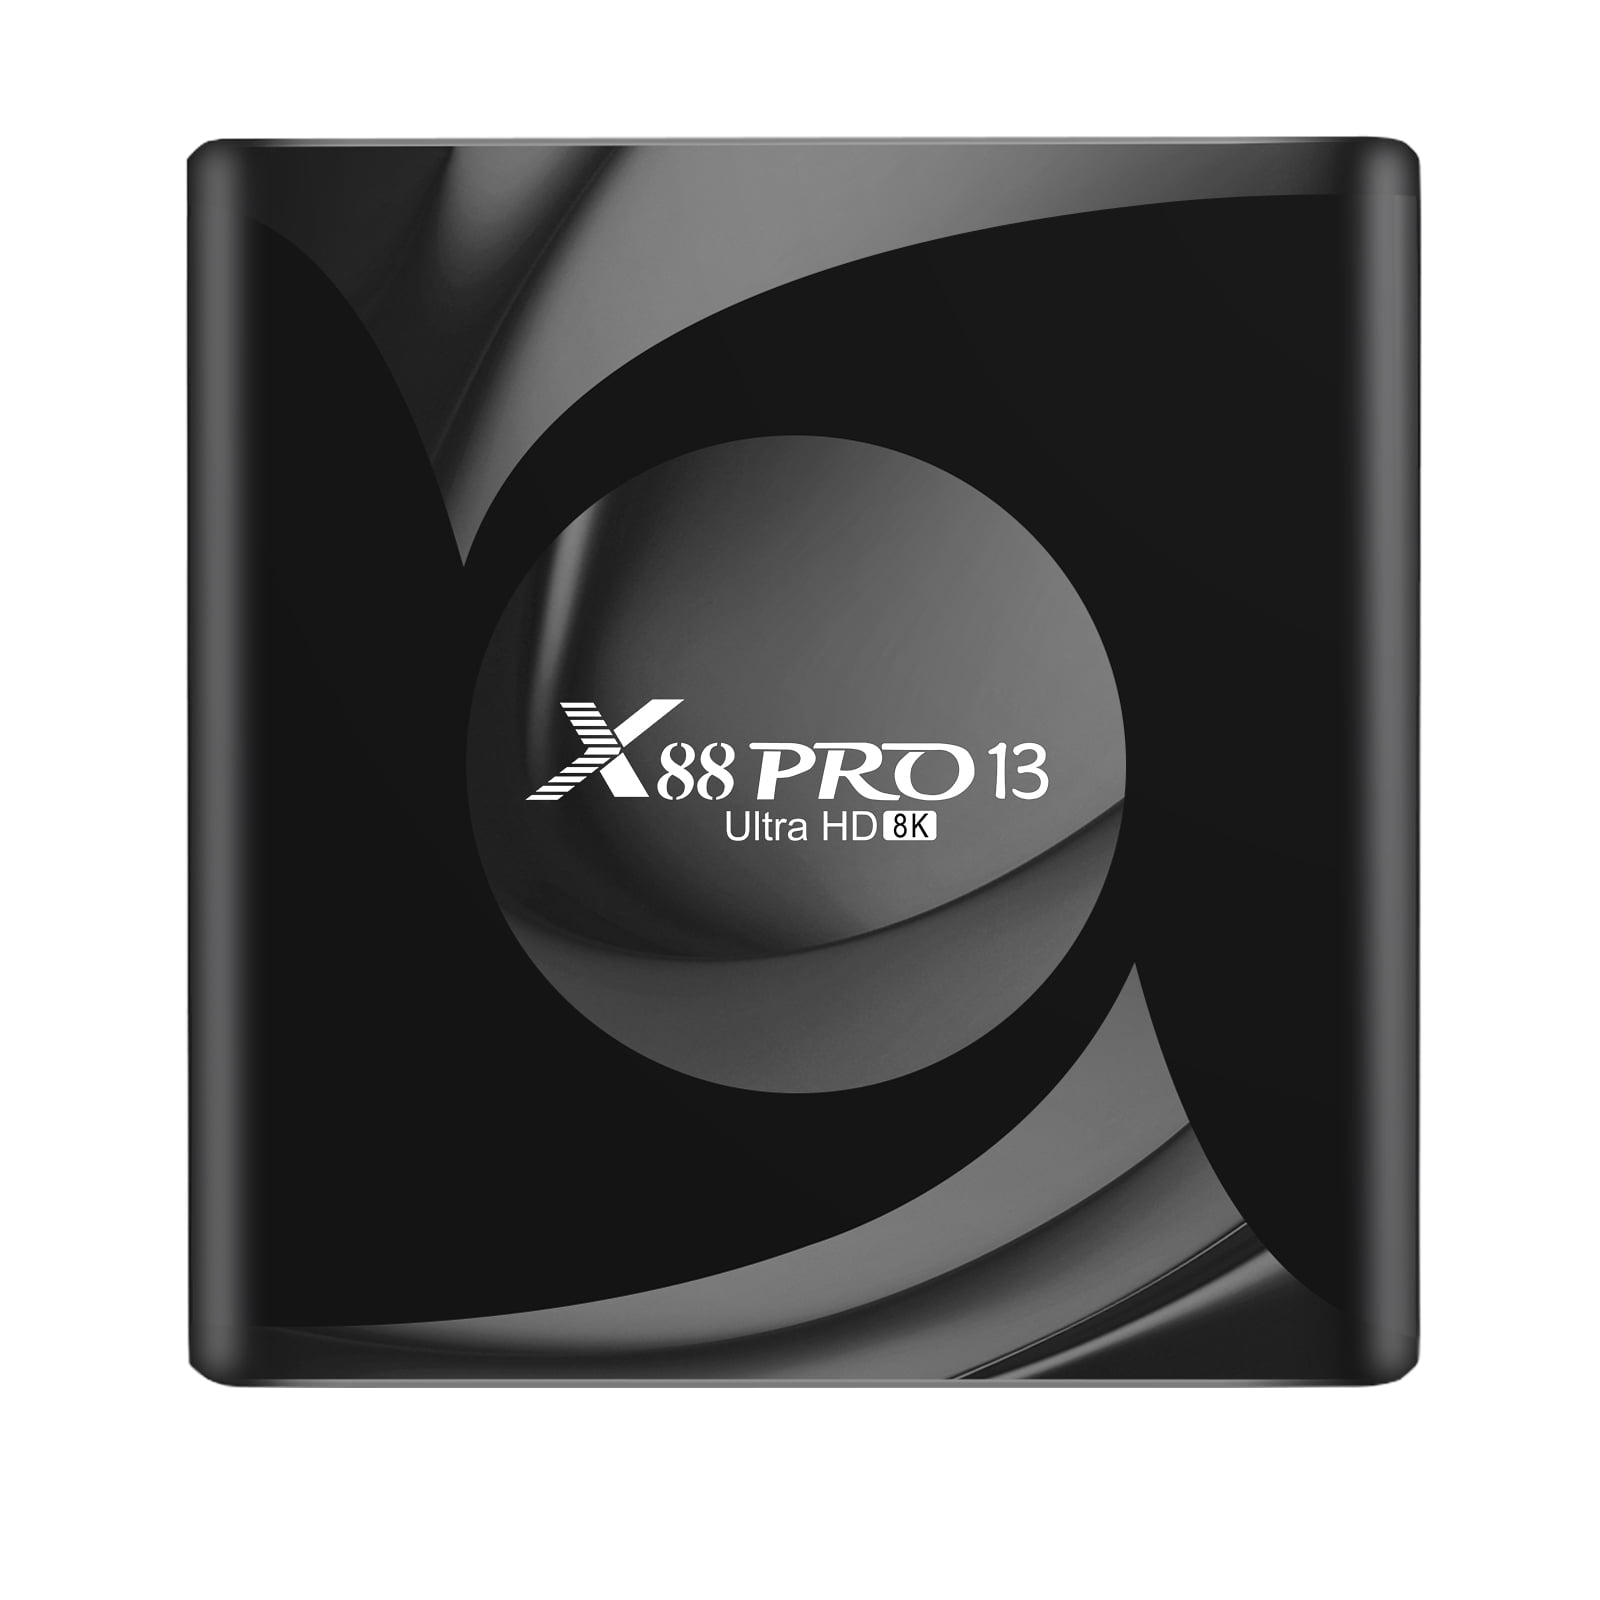 Boitier iptv X88 PRO 13 Smart TV Box Android 13 RK3528 WiFi 6